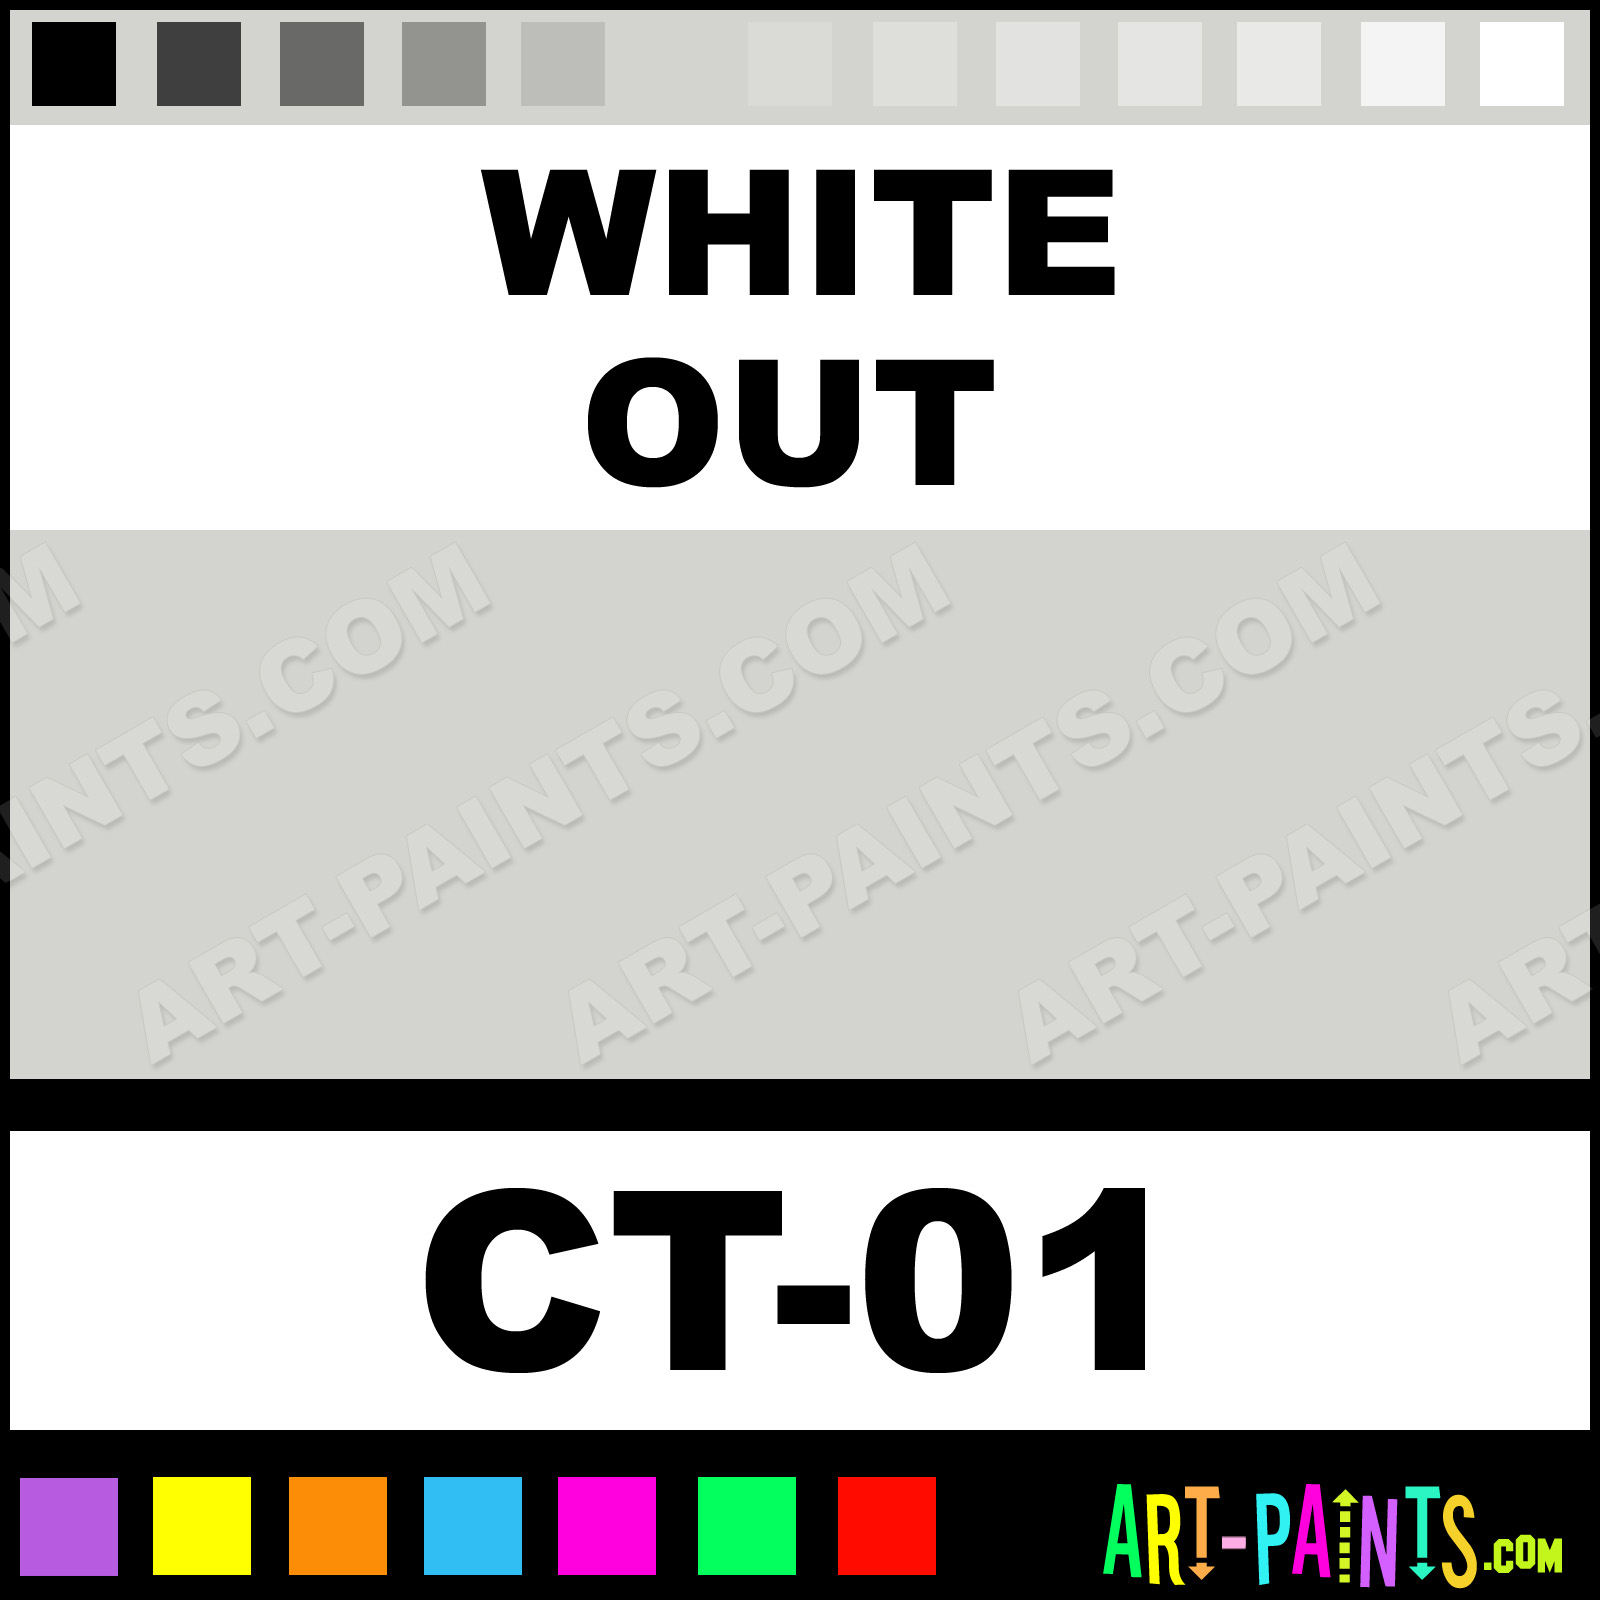 white out on adobe pdf